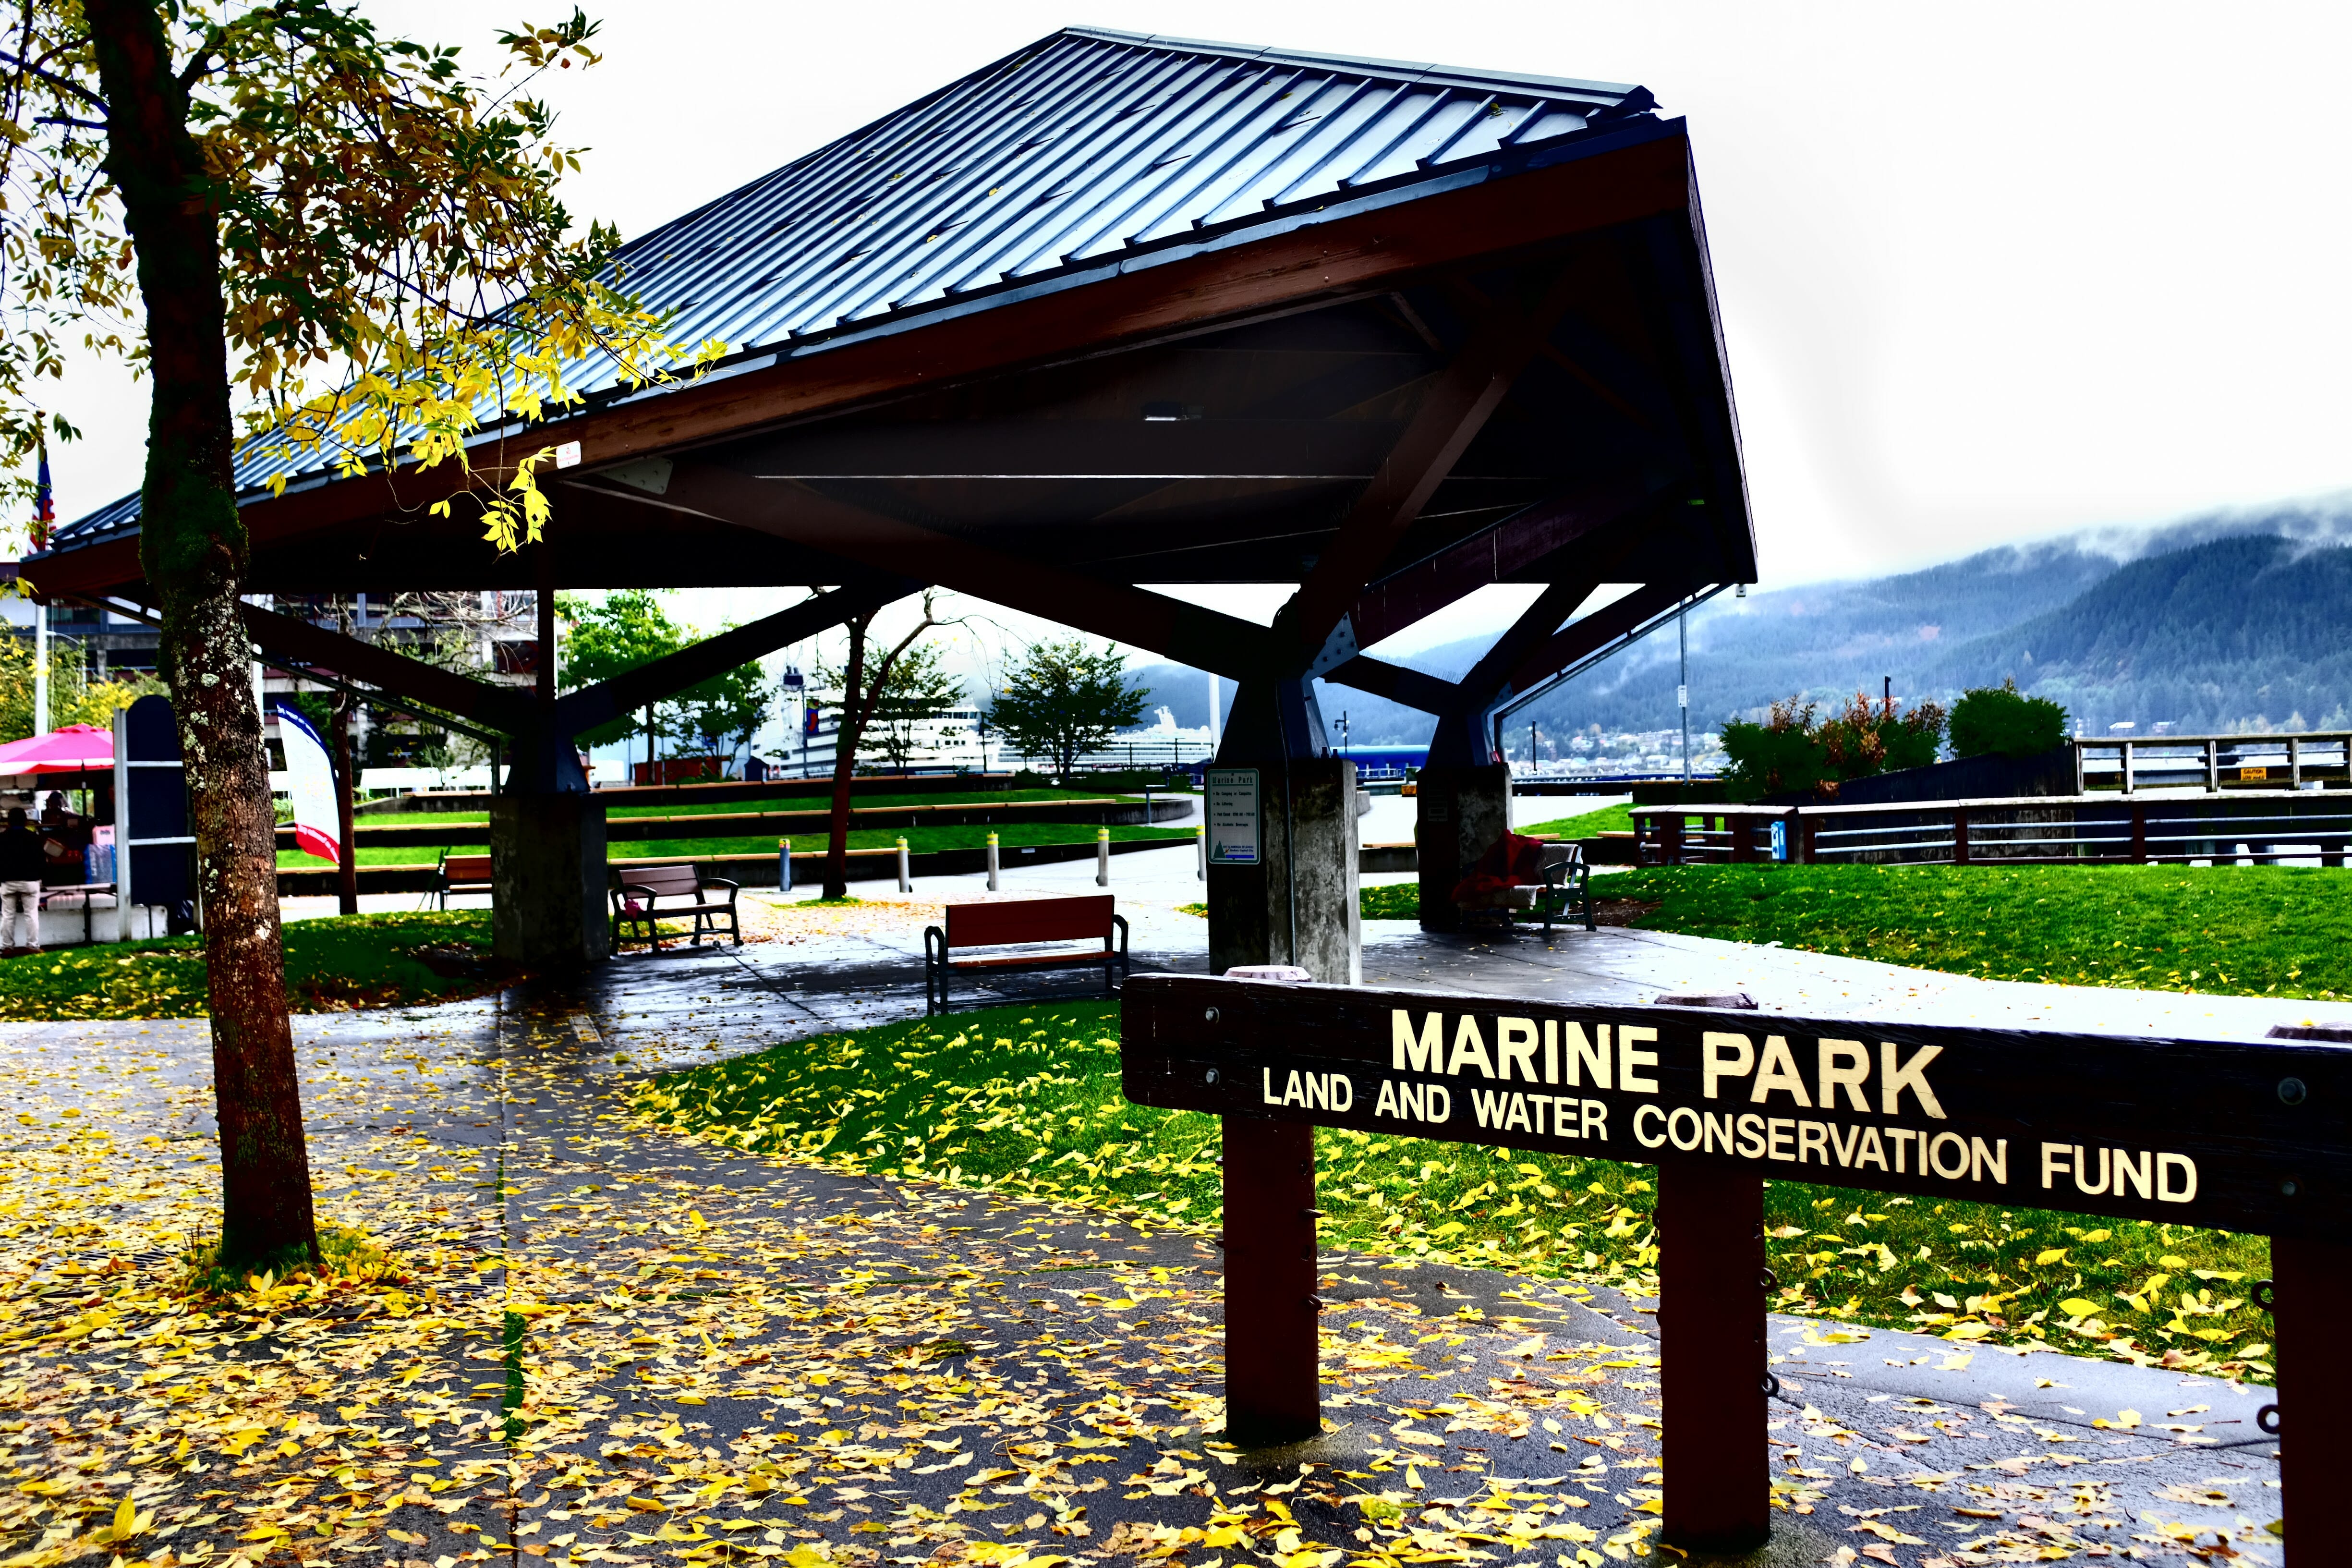 Marine Park Pavilion and sign